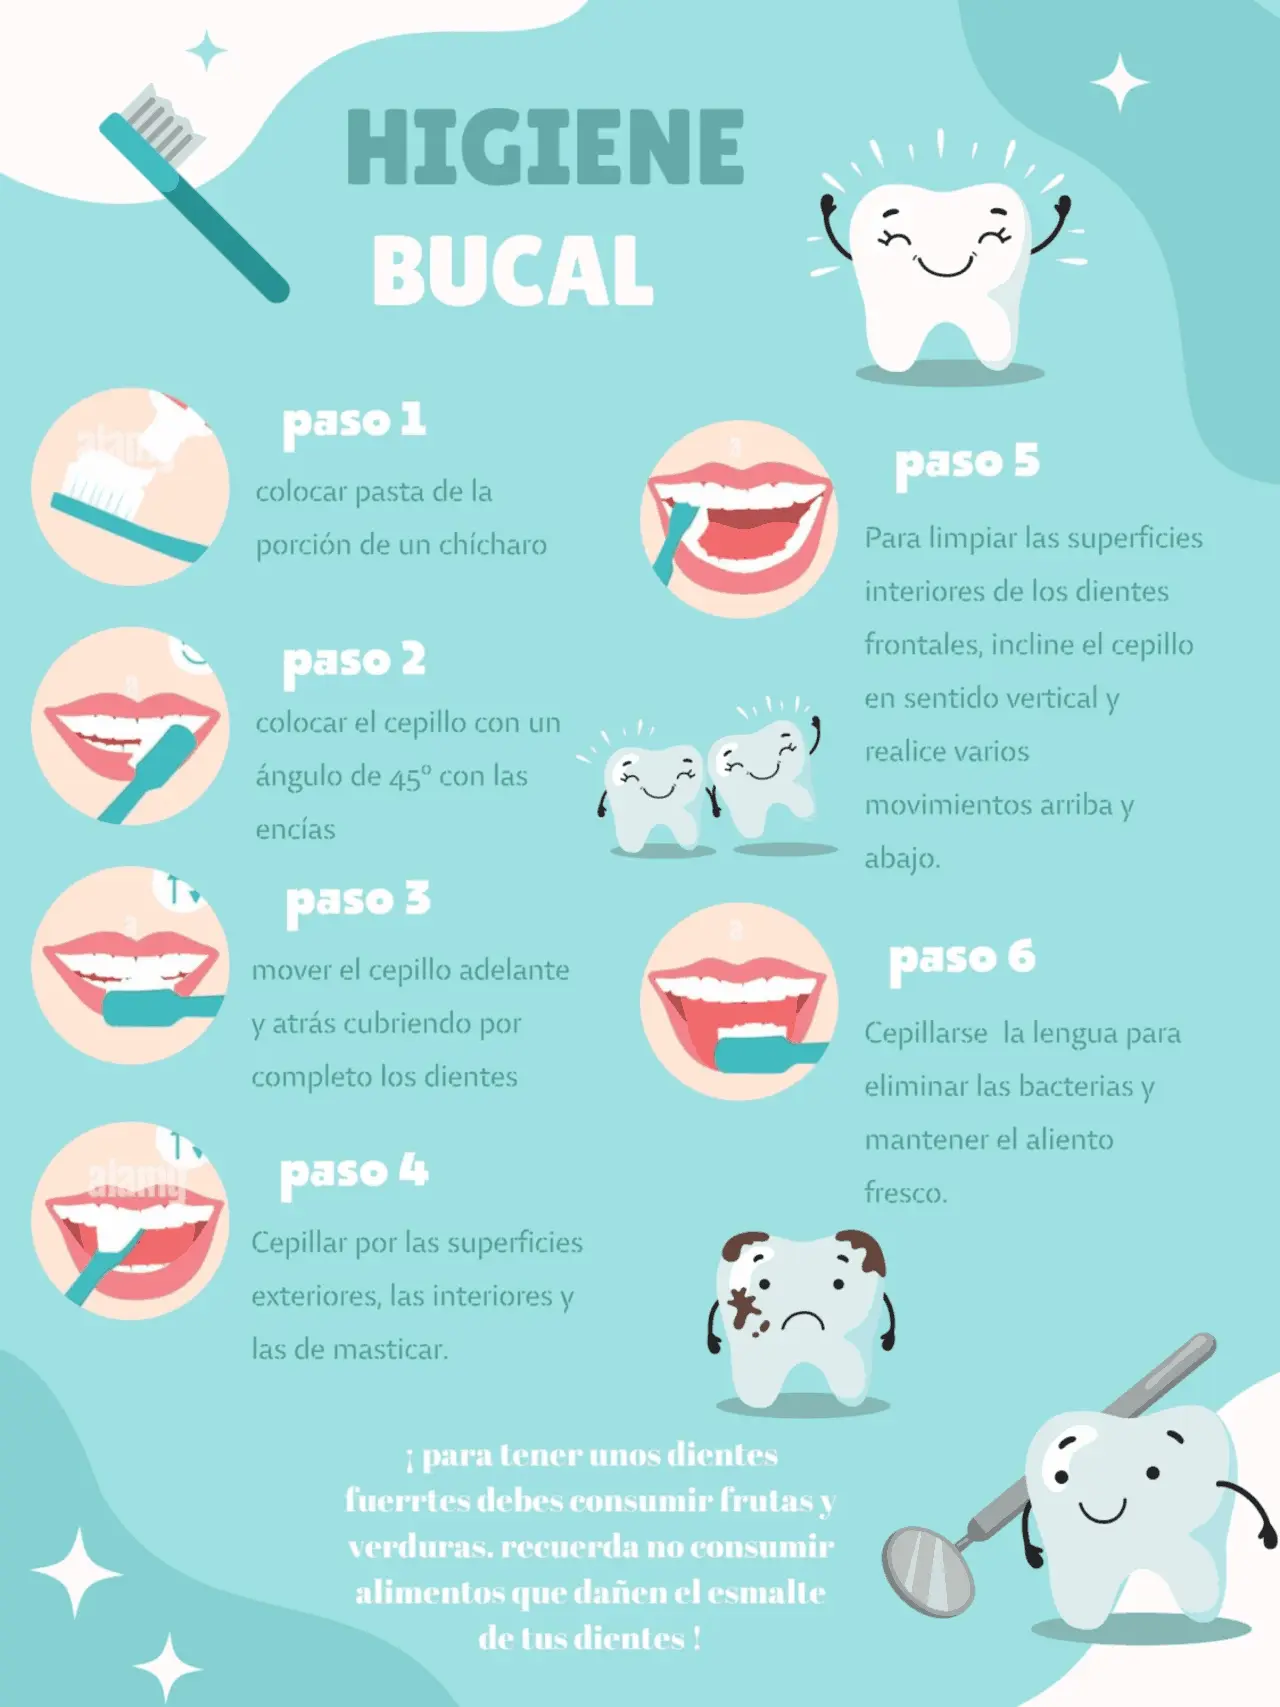 resumen de higiene bucal - Qué es la higiene bucal resumen